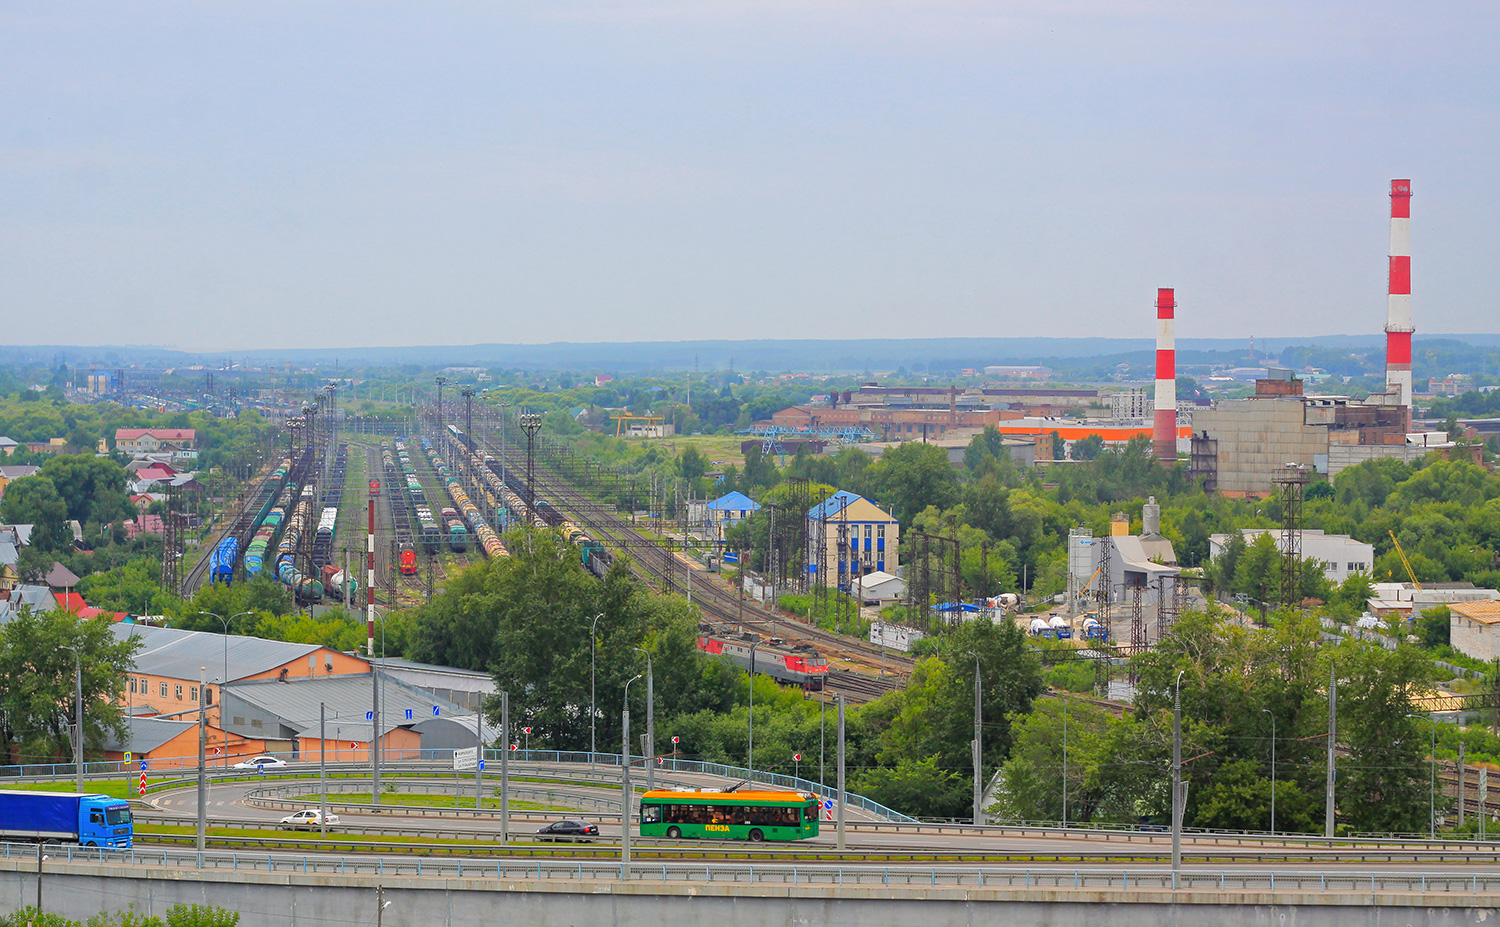 Penza — Trolleybus lines — Ternovka